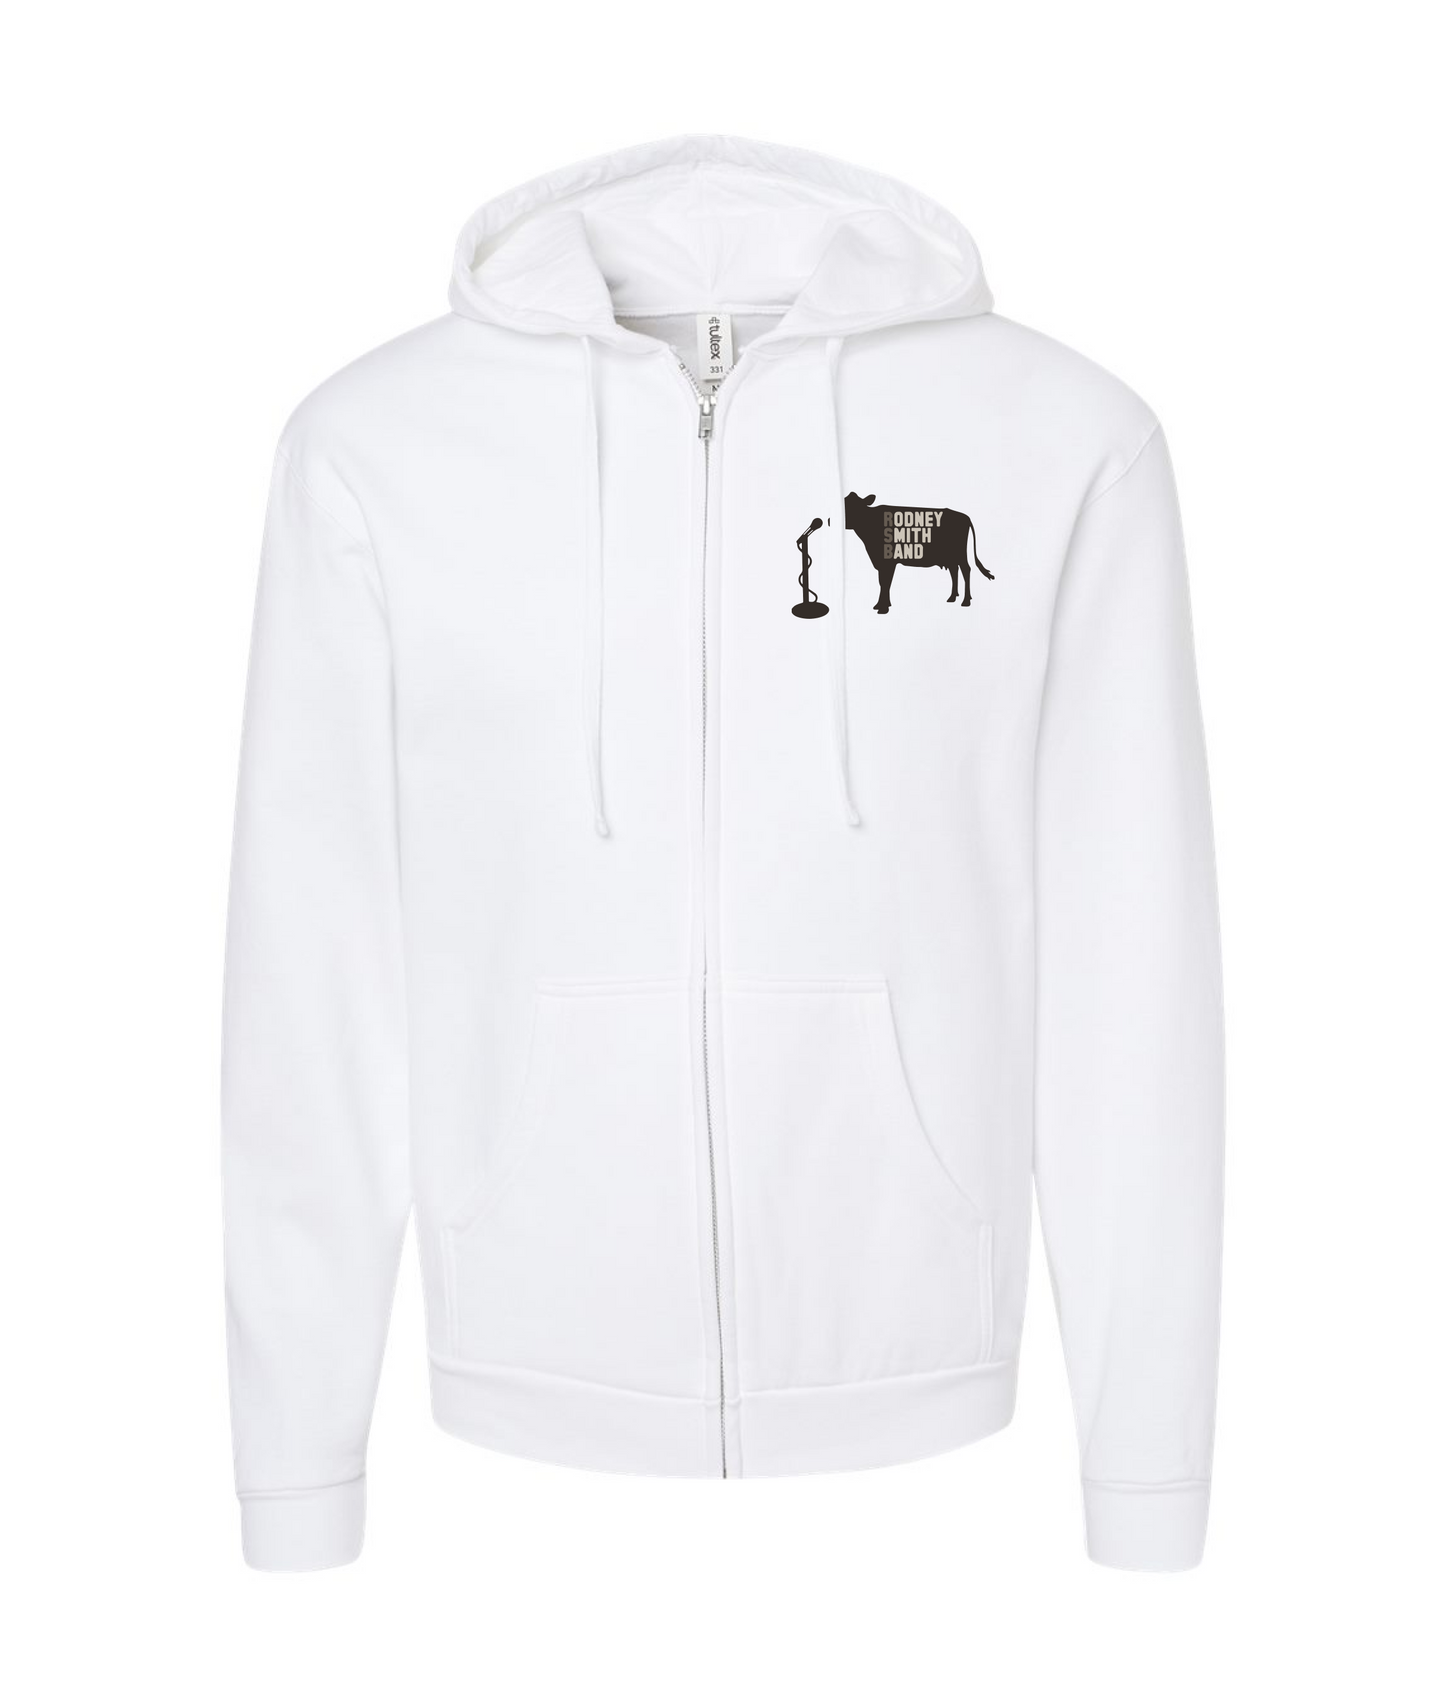 Rodney Smith Band - Cow Logo - White Zip Hoodie